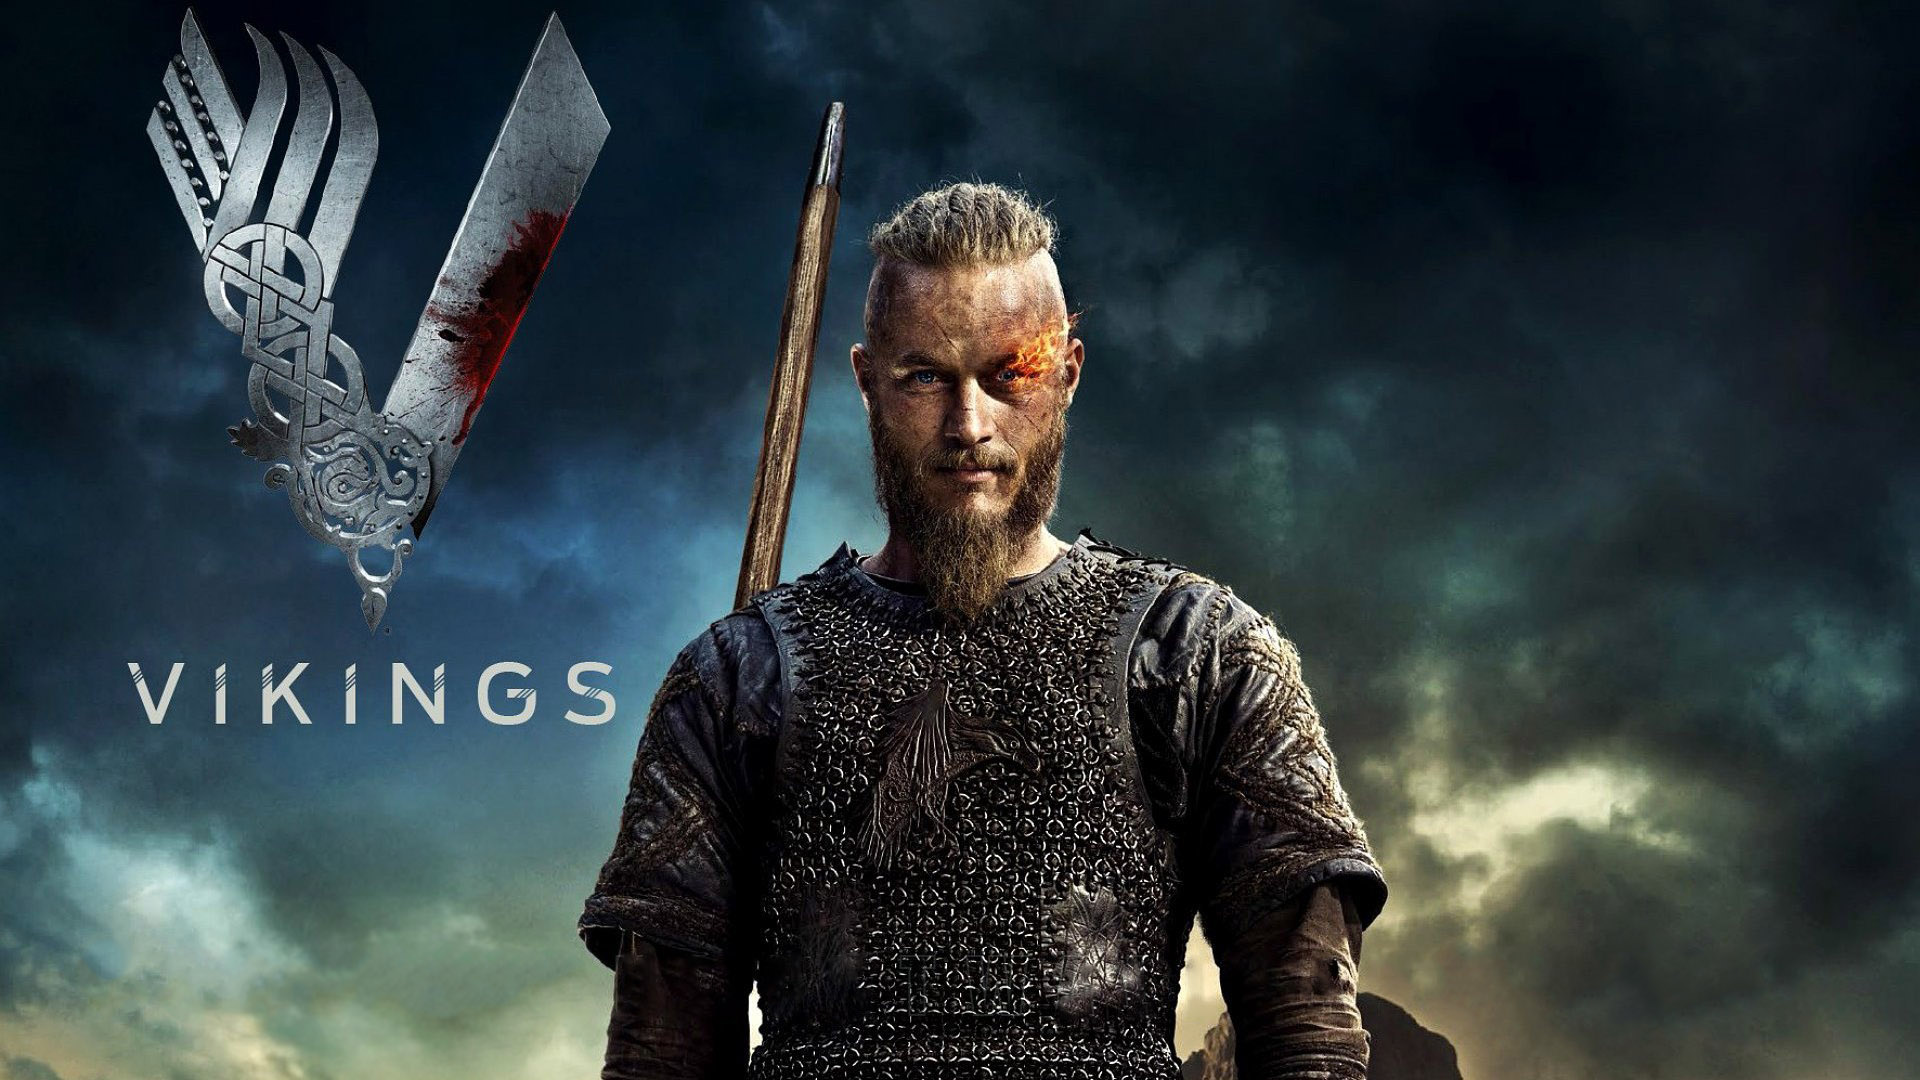 Travis Fimmel As Ragnar Lothbrok In Vikings Wallpaper